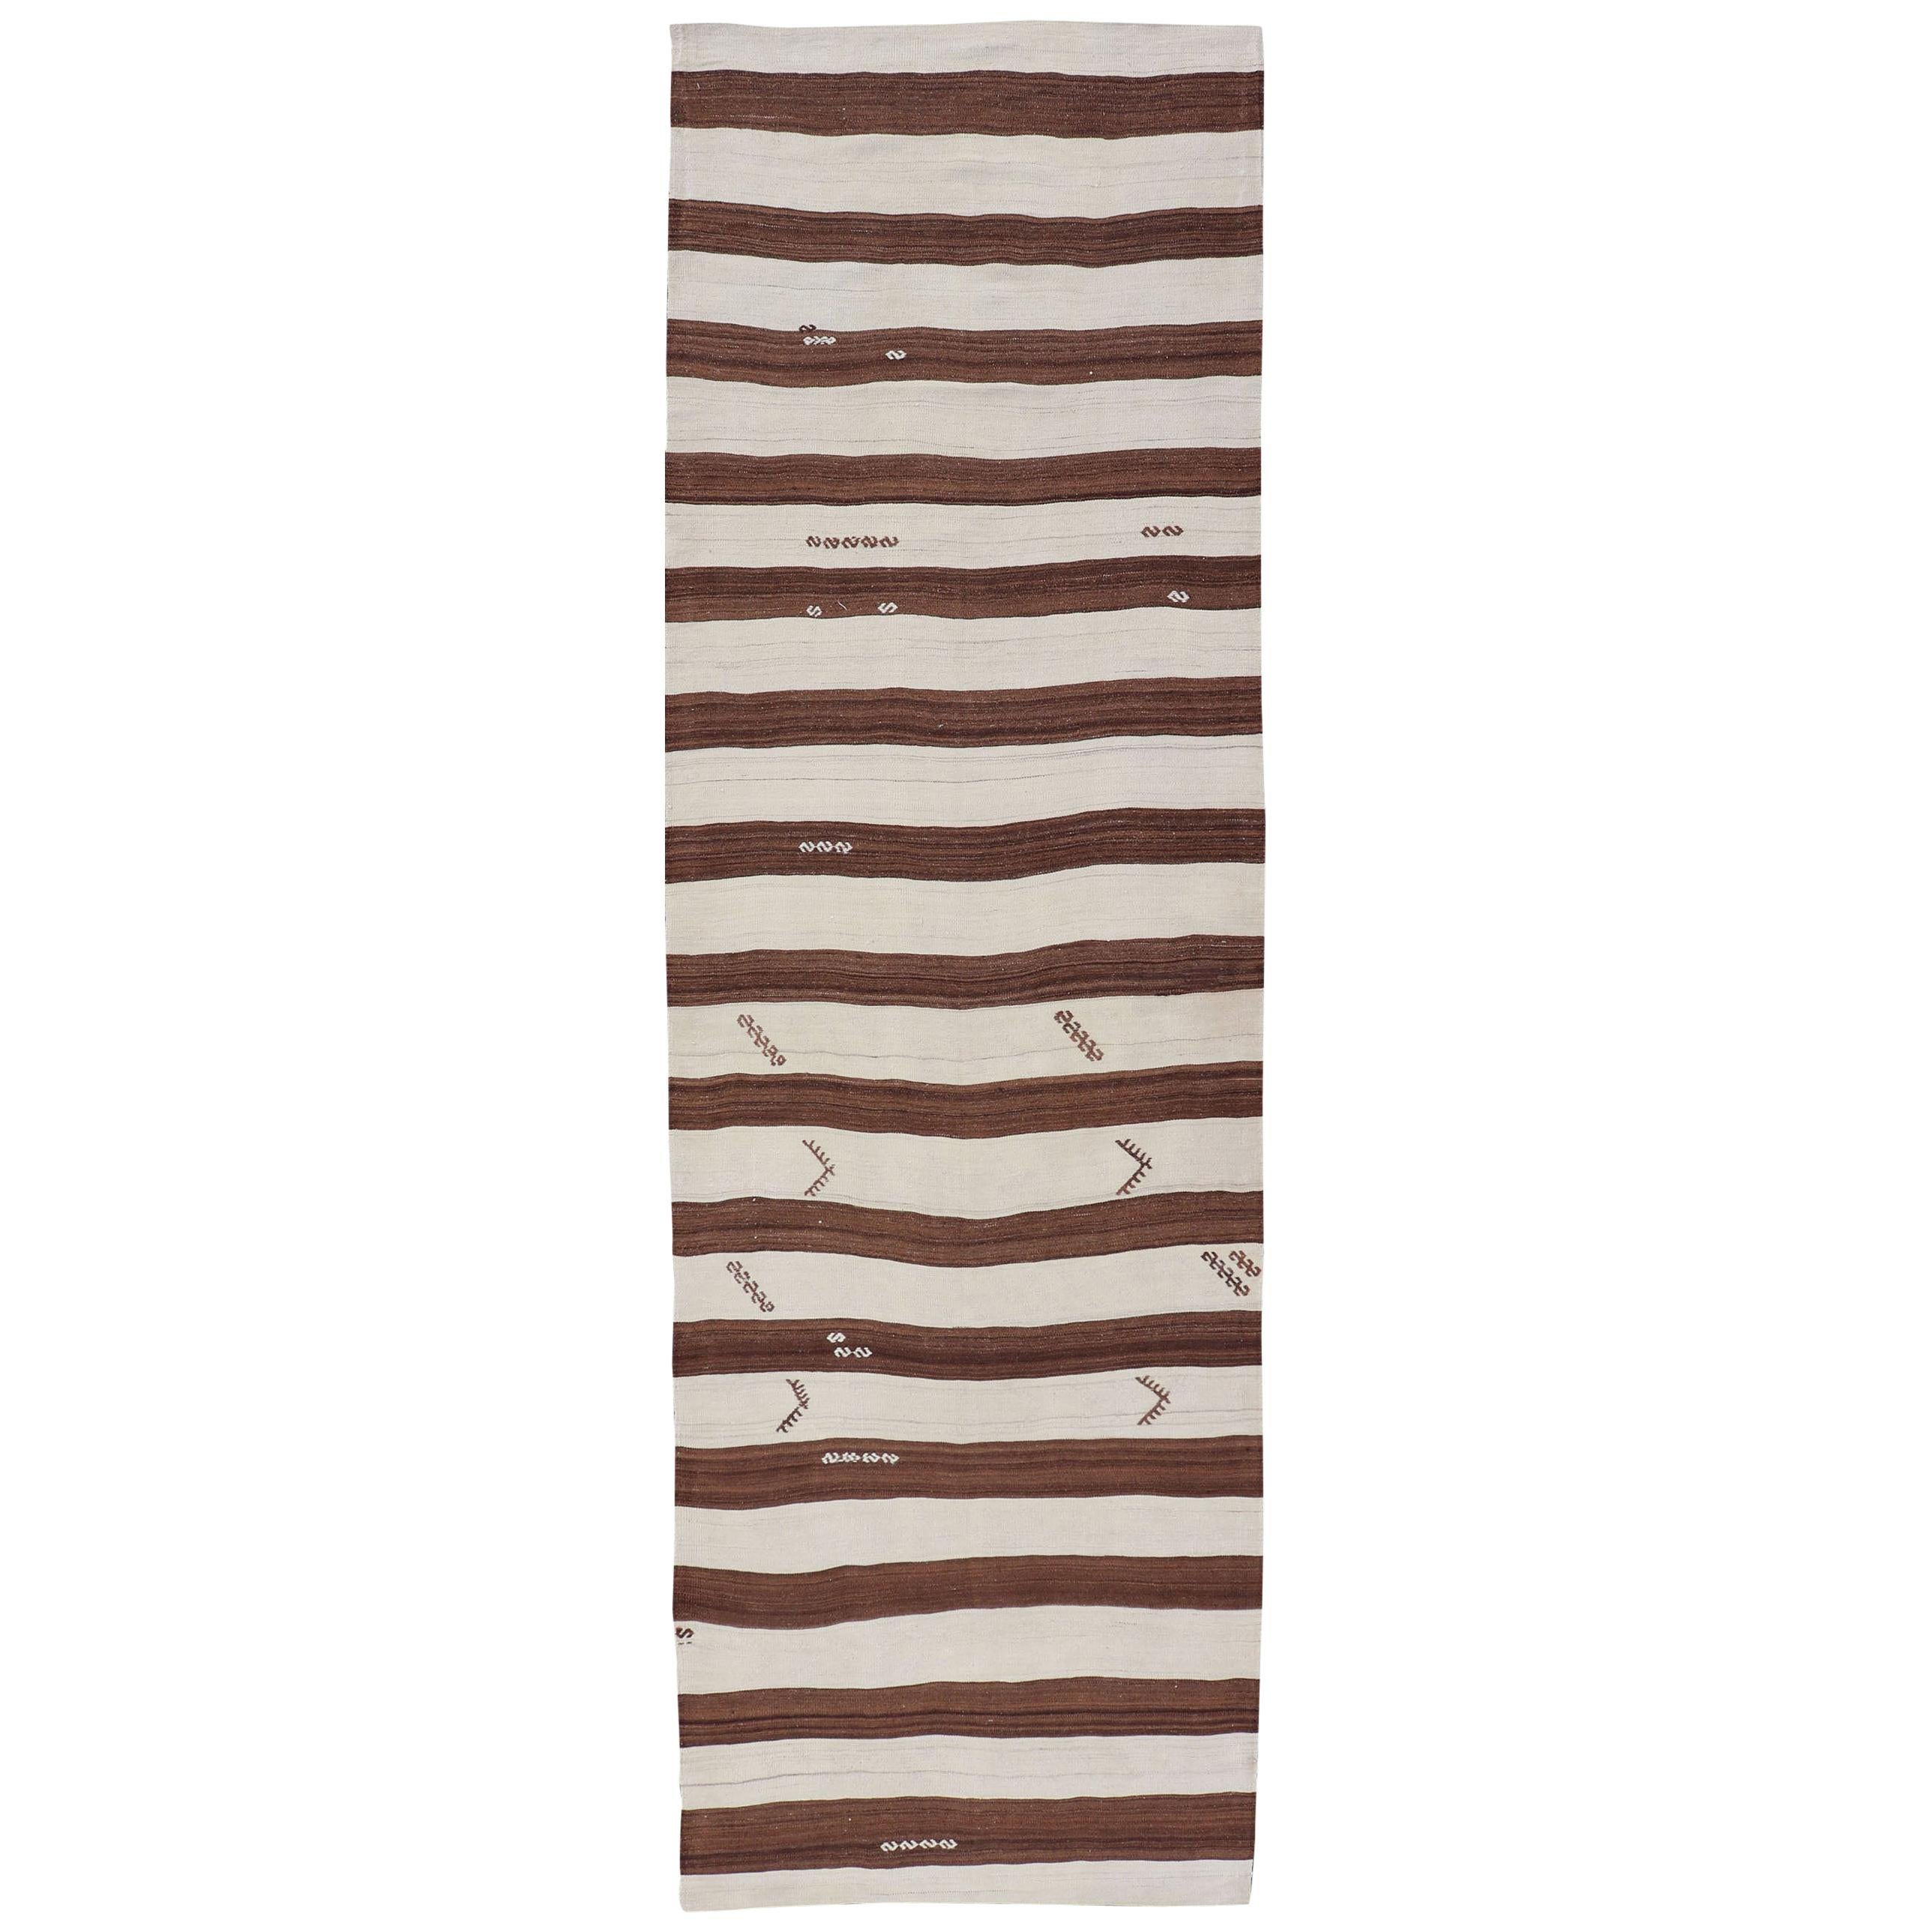 Vintage Kilim Flat-Weave Runner with Cream & Brown in Stripe Design